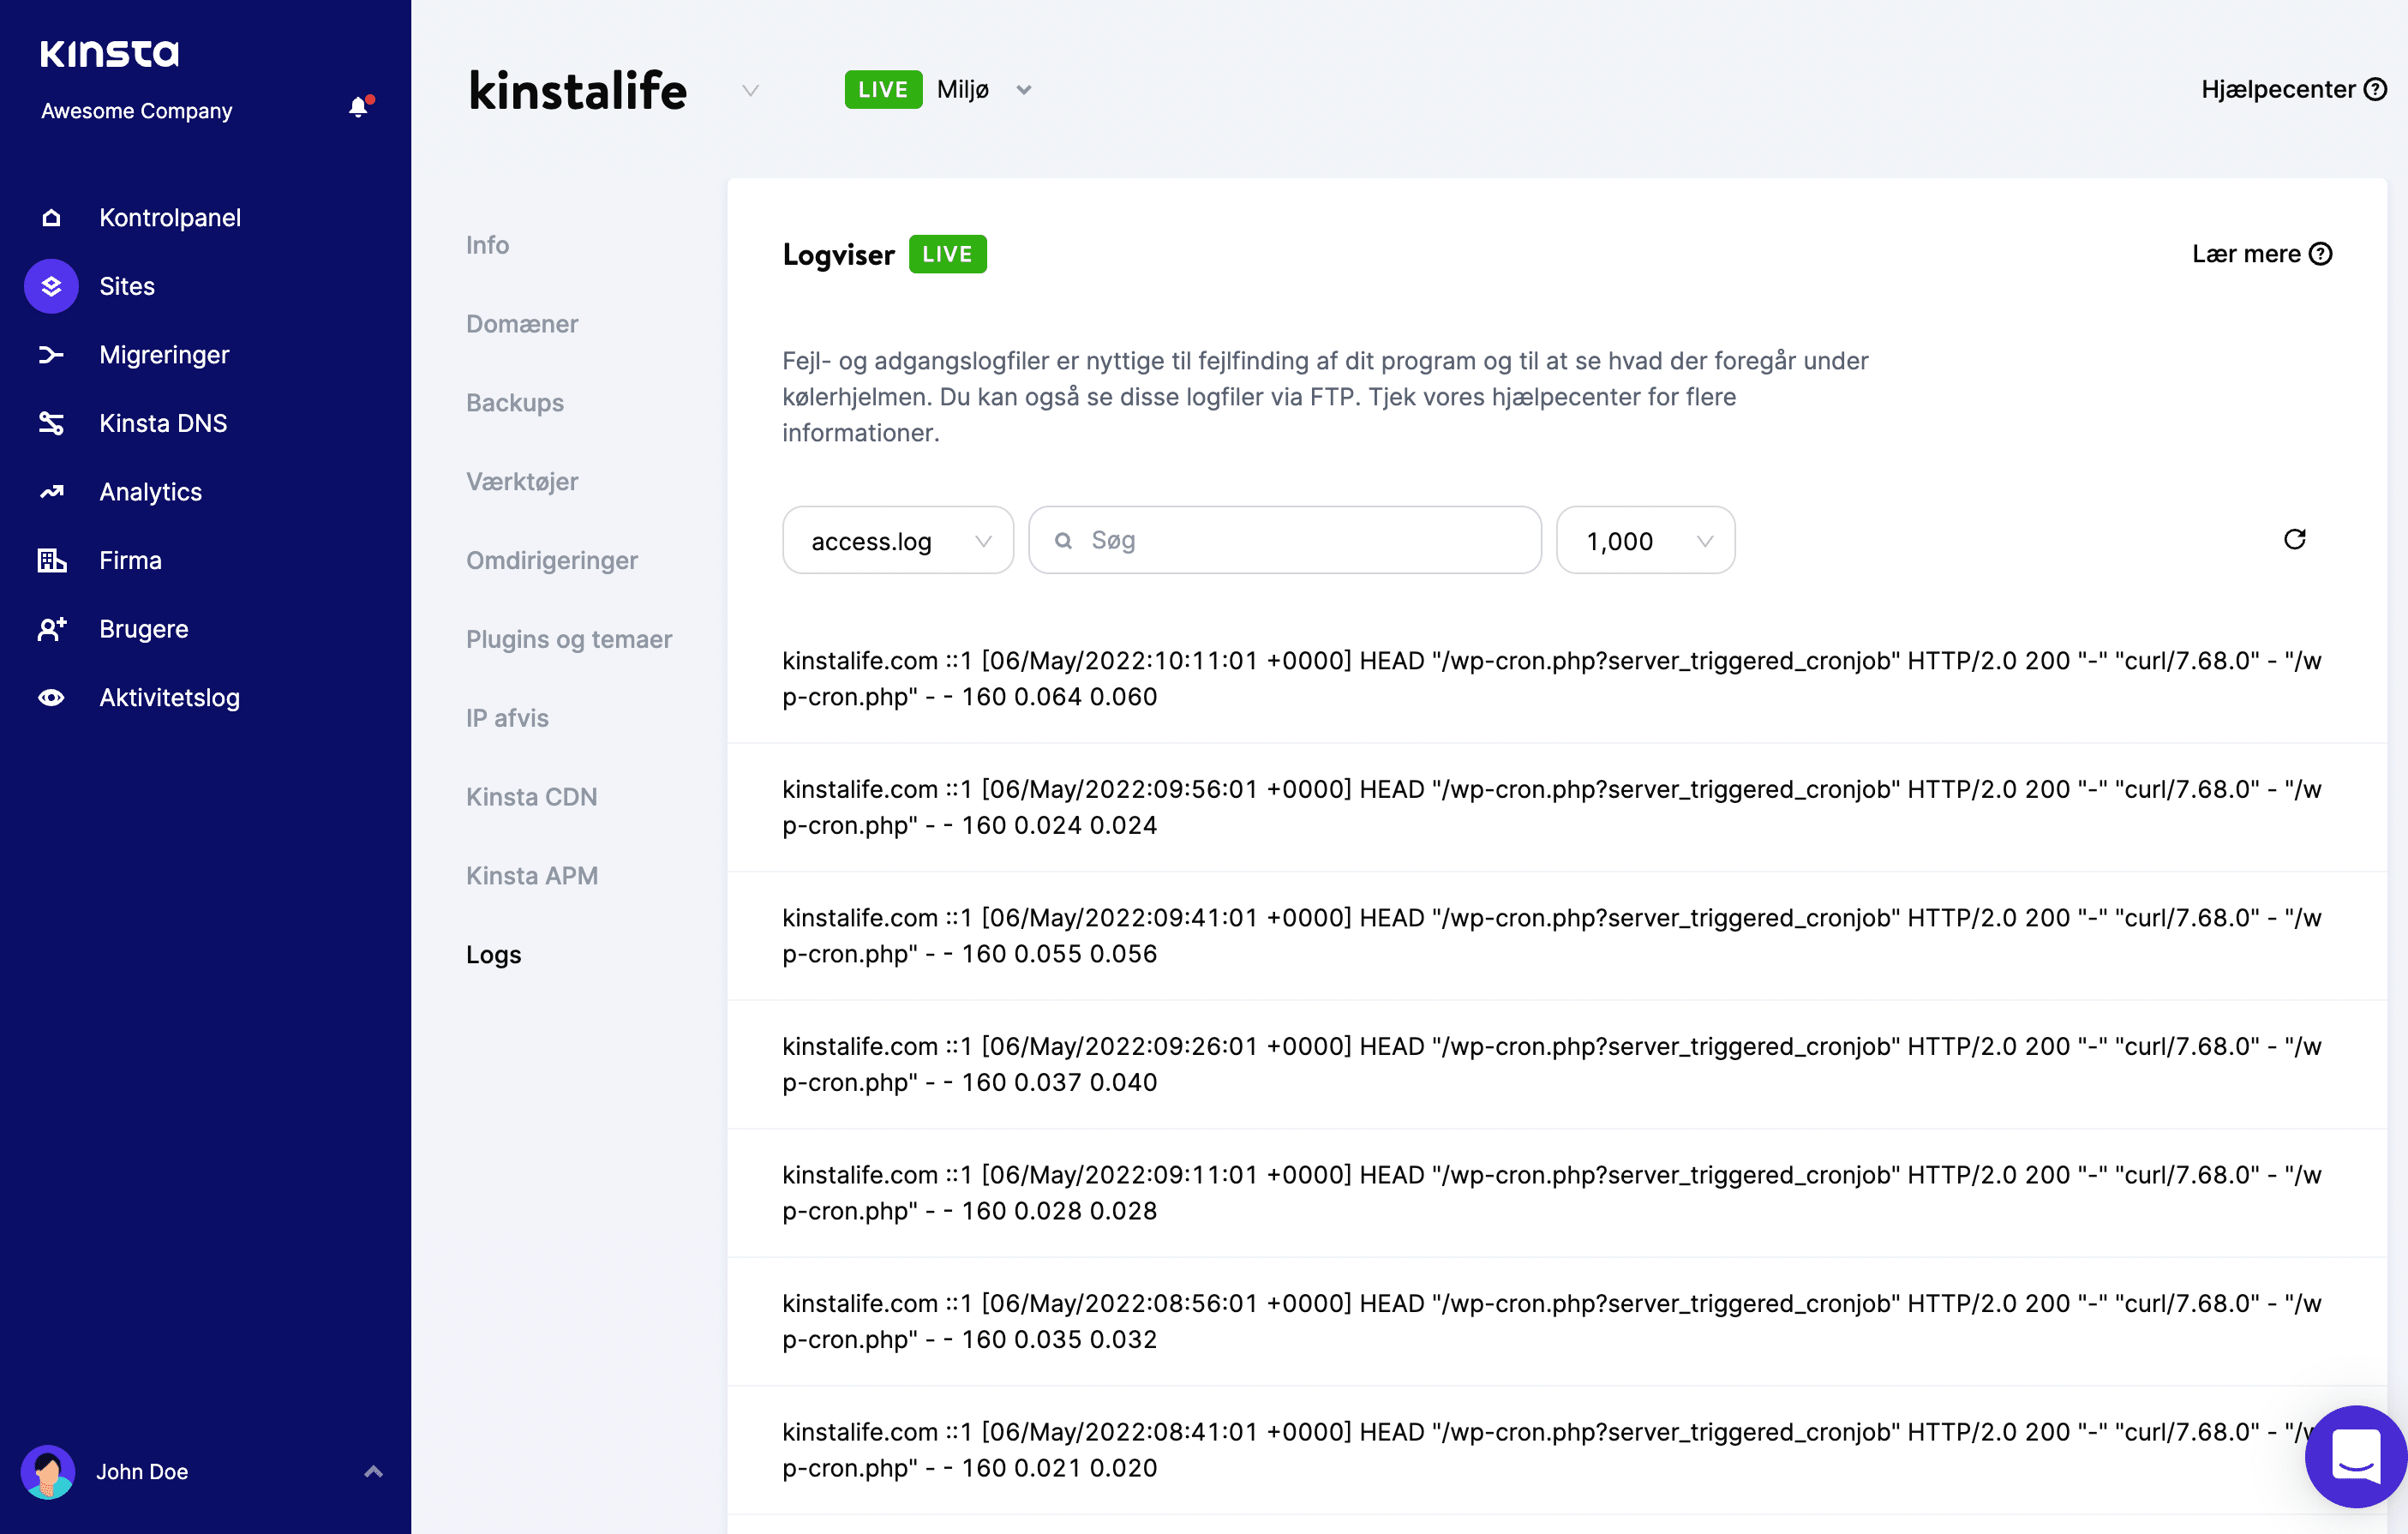 access.log fil i MyKinsta Logviser.